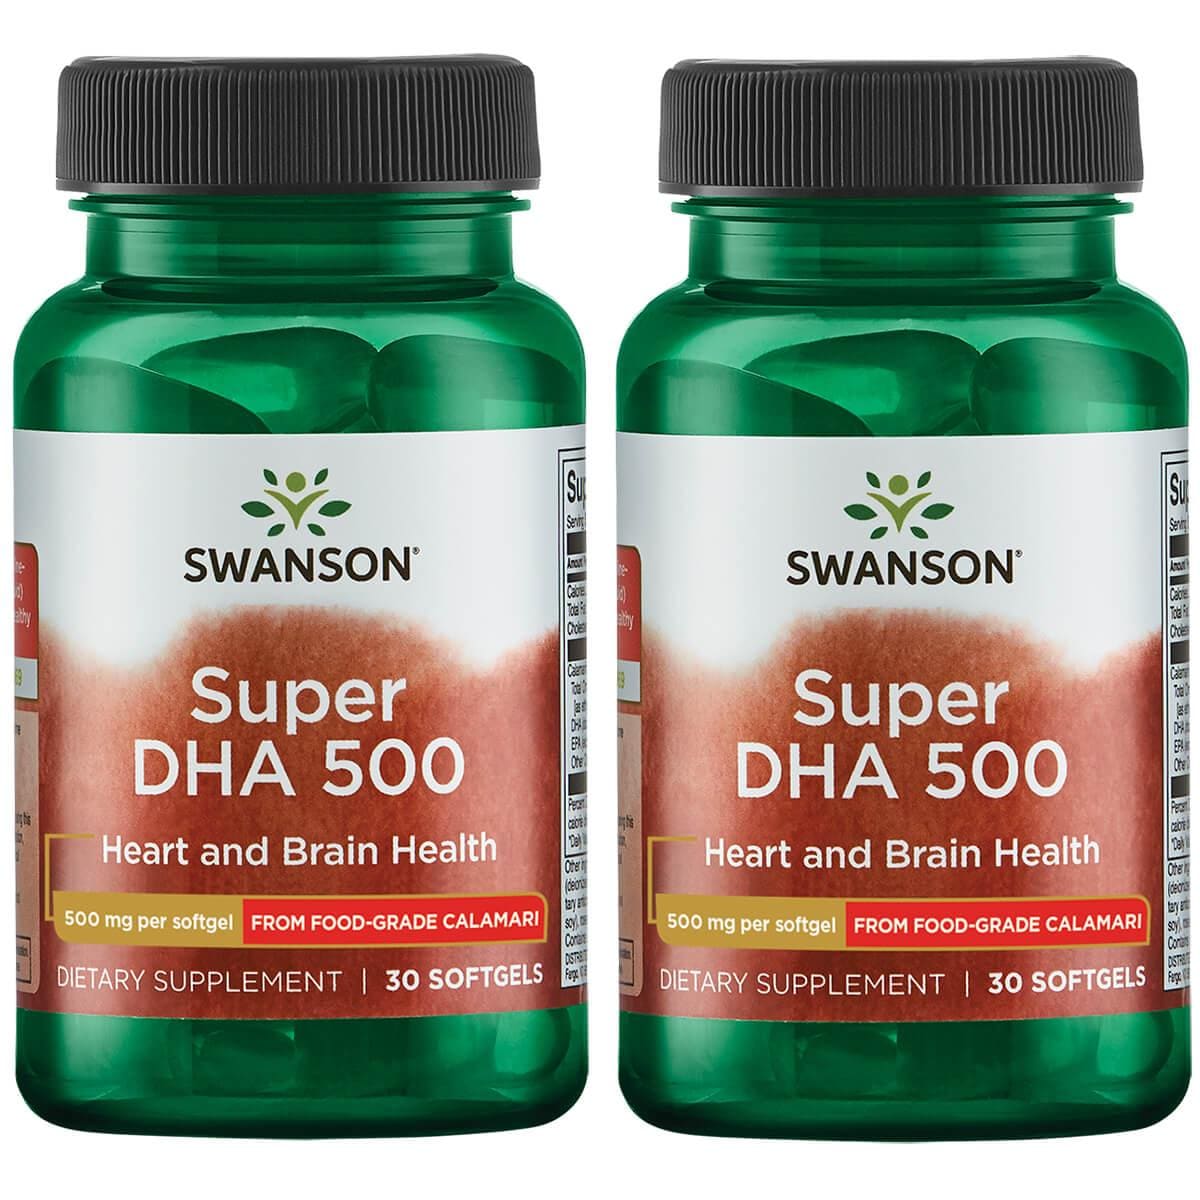 Swanson EFAs Super Dha 500 from Food-Grade Calamari 2 Pack Supplement Vitamin 500 mg 30 Soft Gels